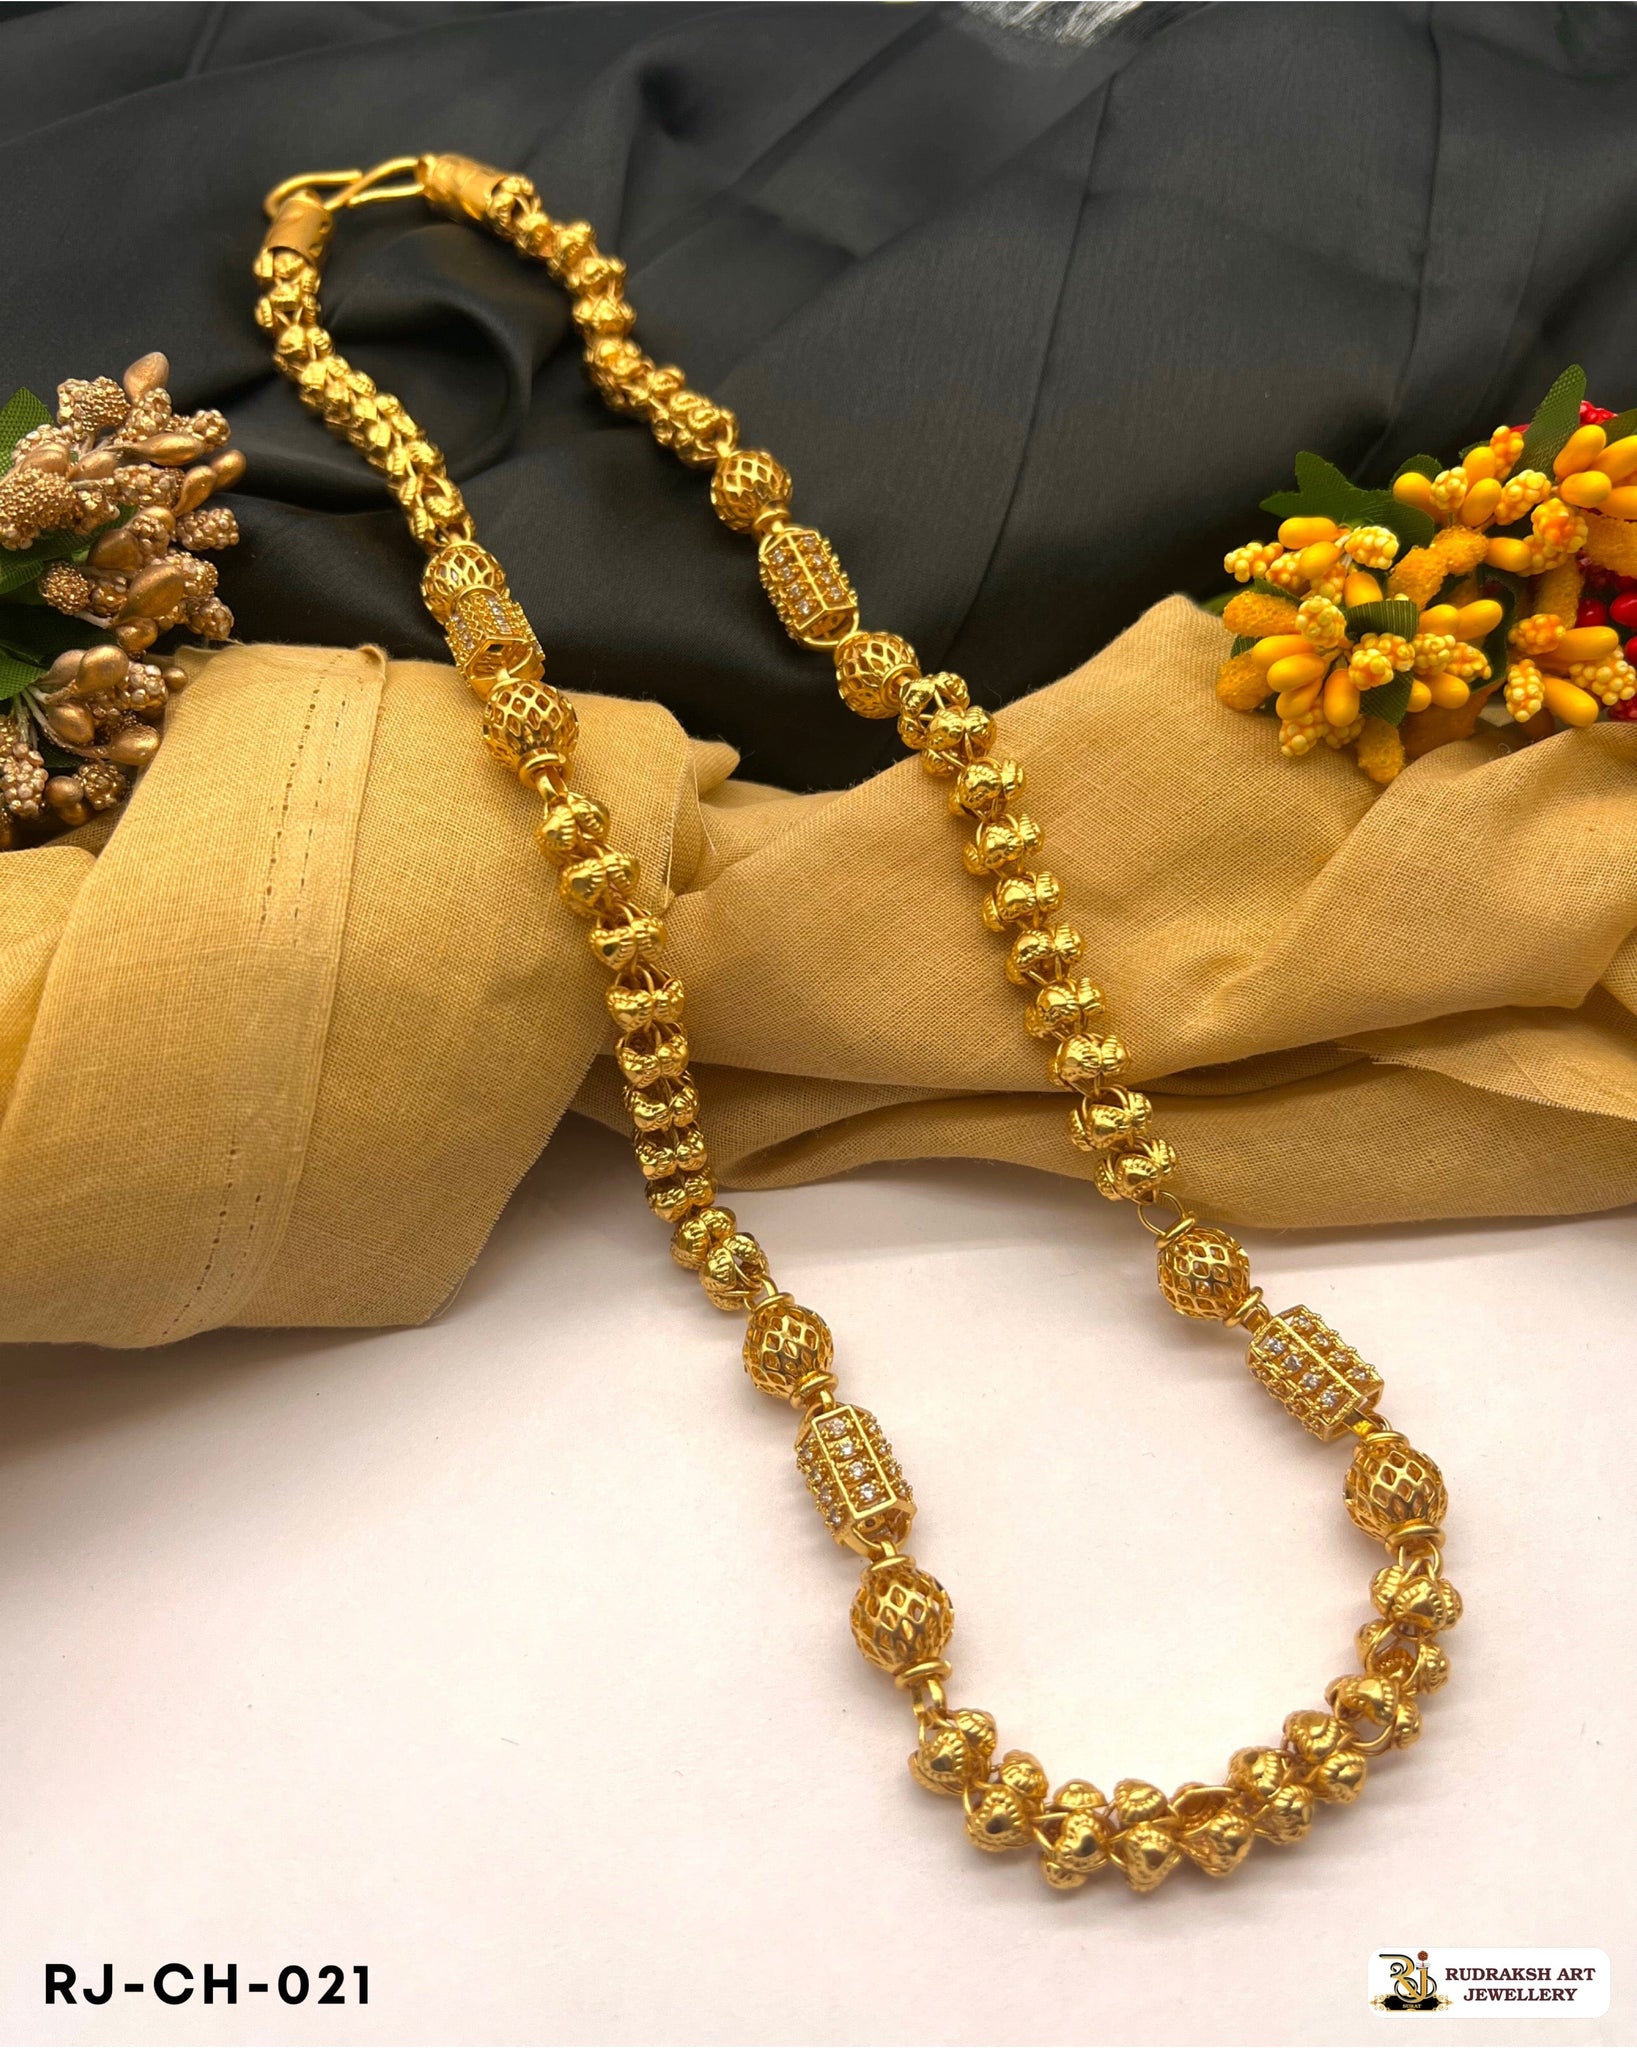 Superior Design of Diamond Piping Chain for Men Rudraksh Art Jewellery